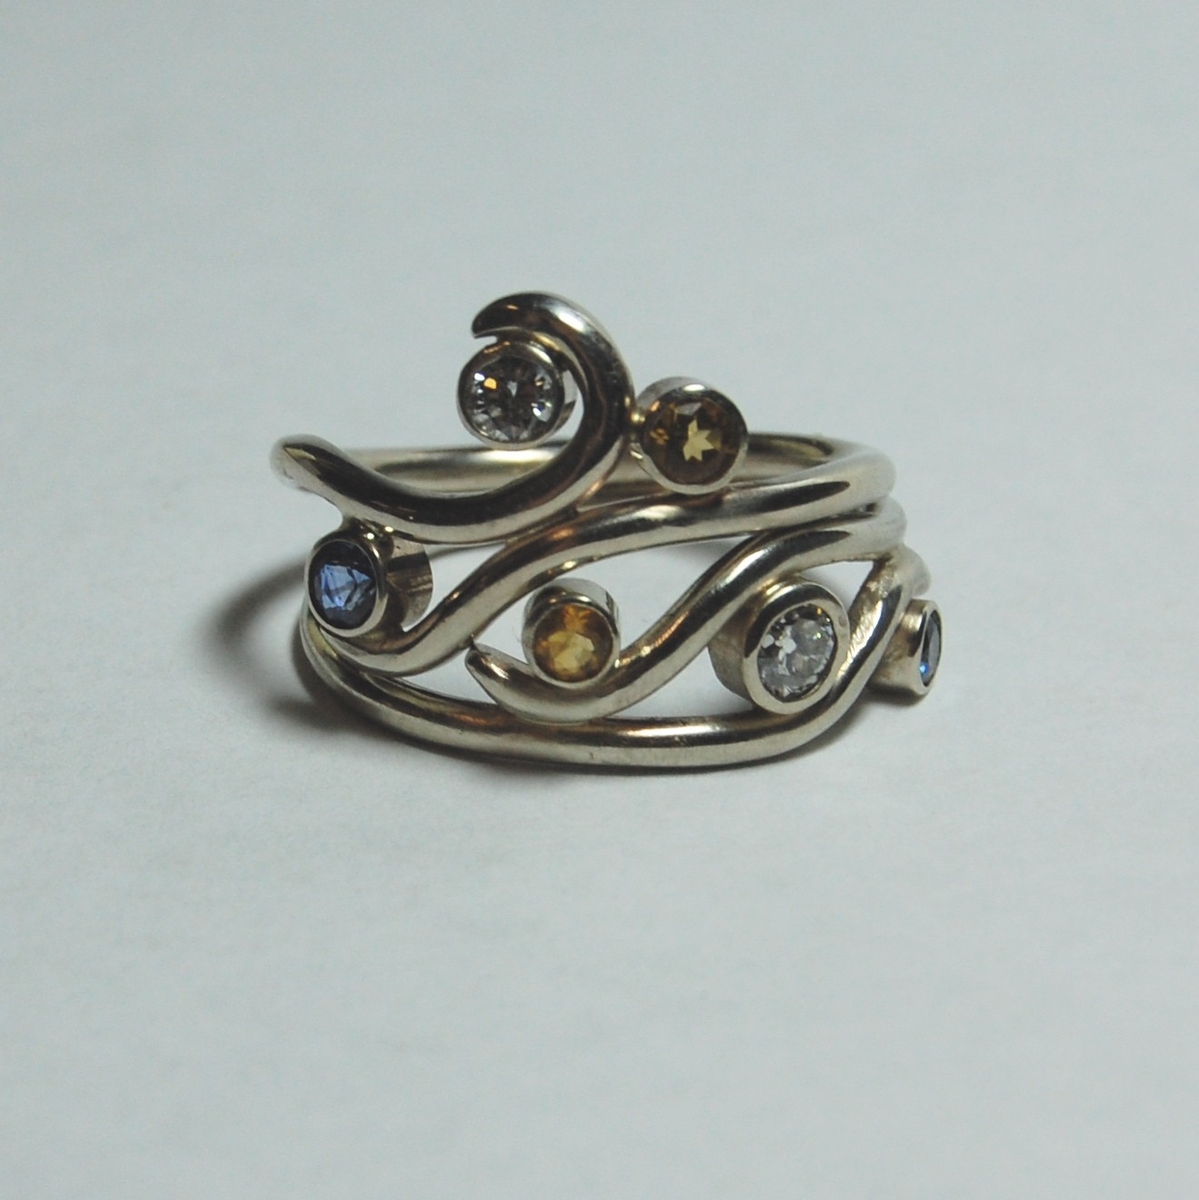 For Maya,â€ Wedding Ring Set by e. scott originals at CustomMade ...